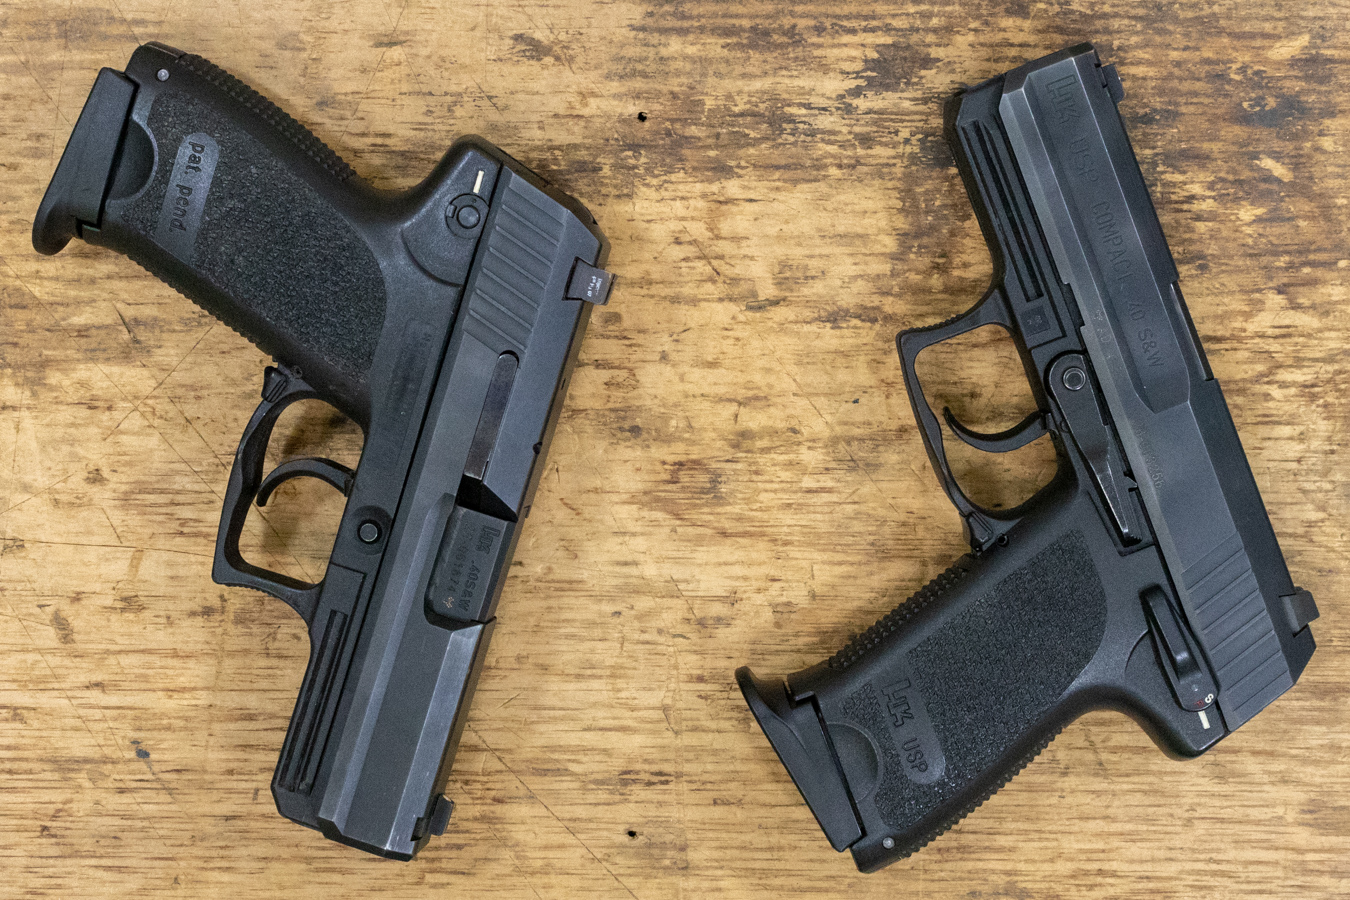 HK USP 40 S&W Compact Police-Trade Pistols (Fair Condition